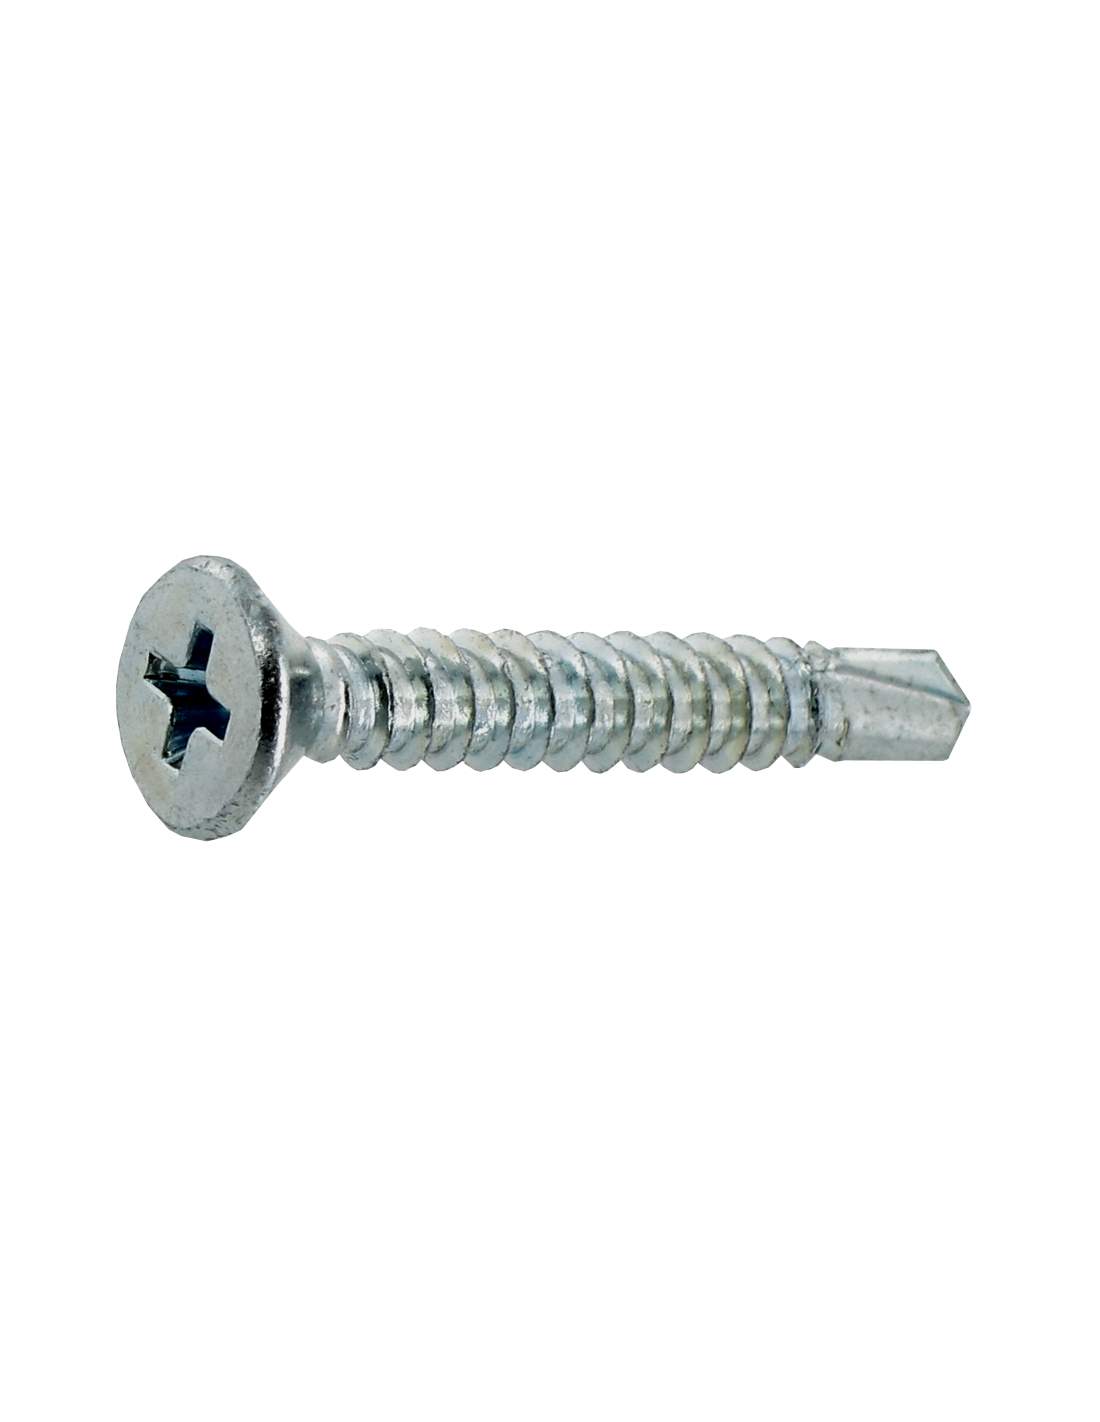 AZI 3.9x16 self-drilling countersunk-head tapping screws, 25 pcs.